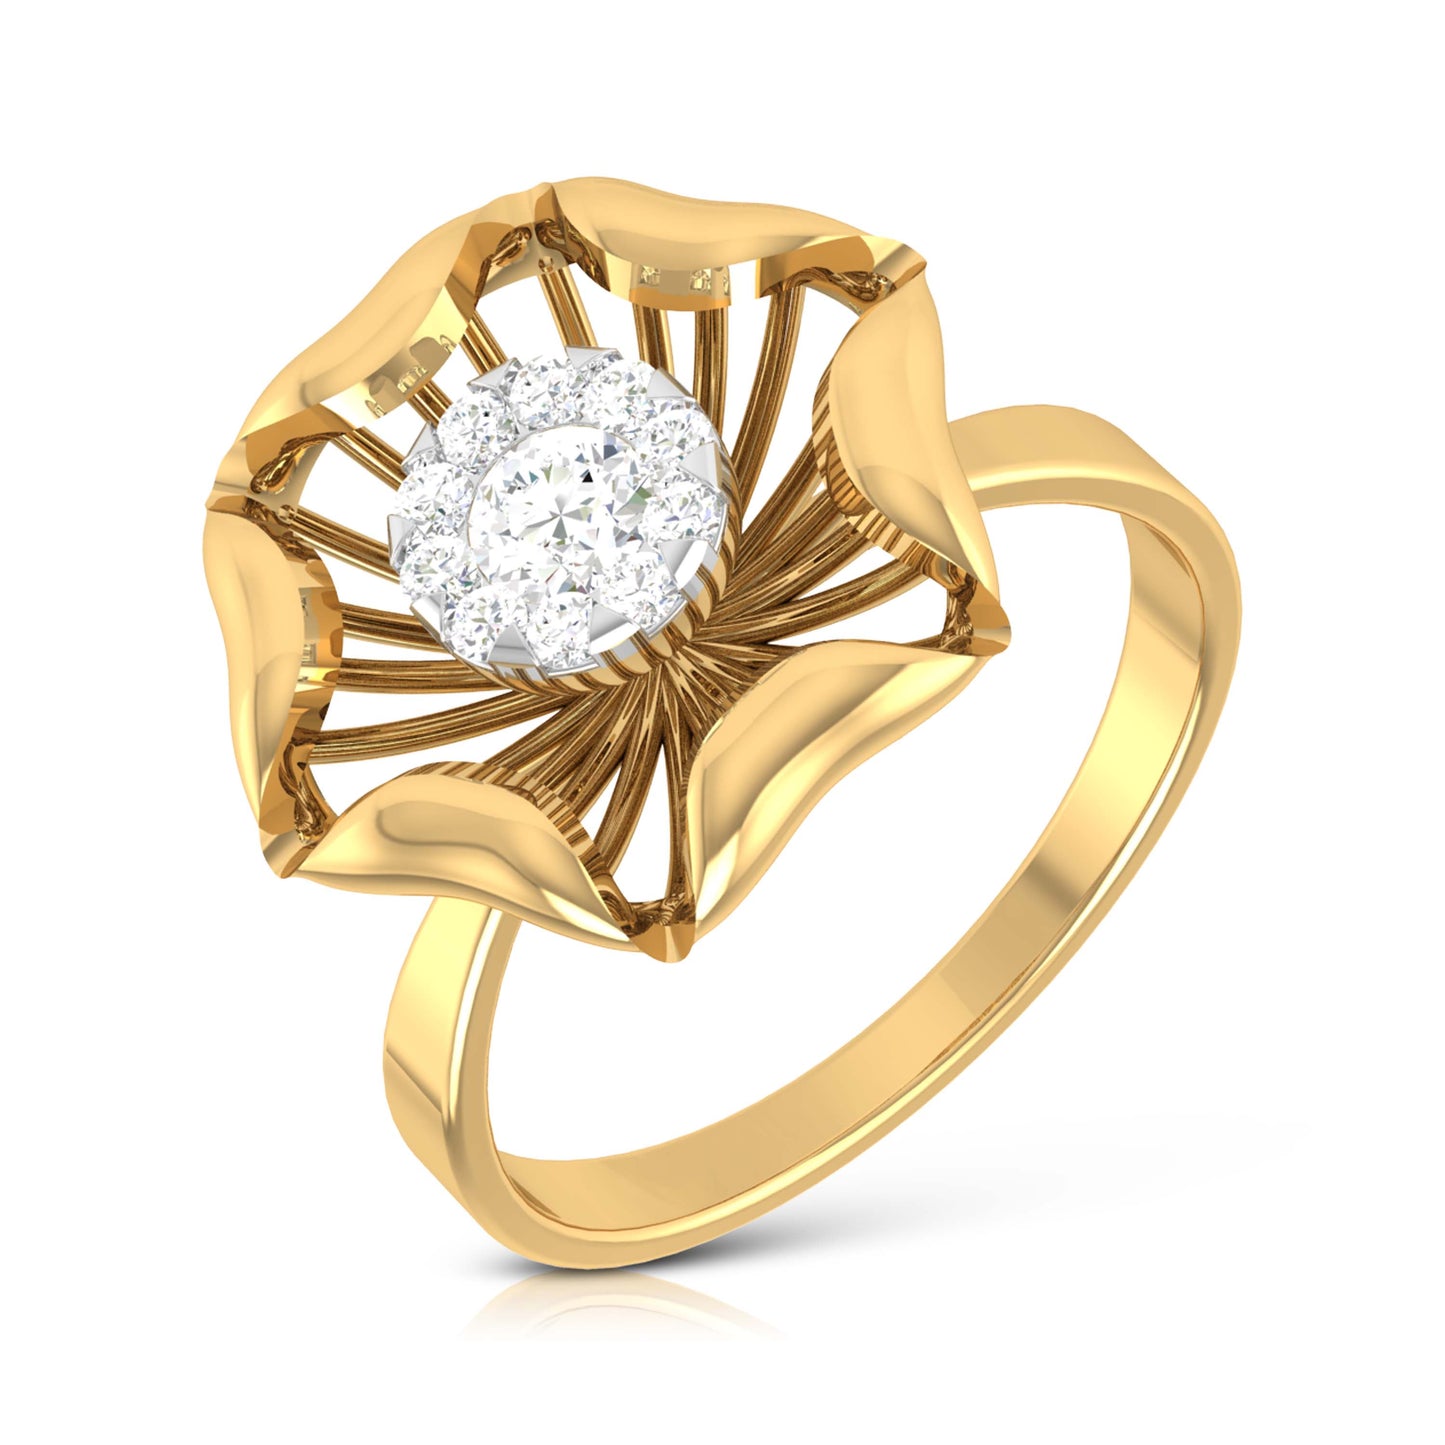 Designer Diamond Ring in Ghaziabad at best price by S Ka Diamonds - Justdial